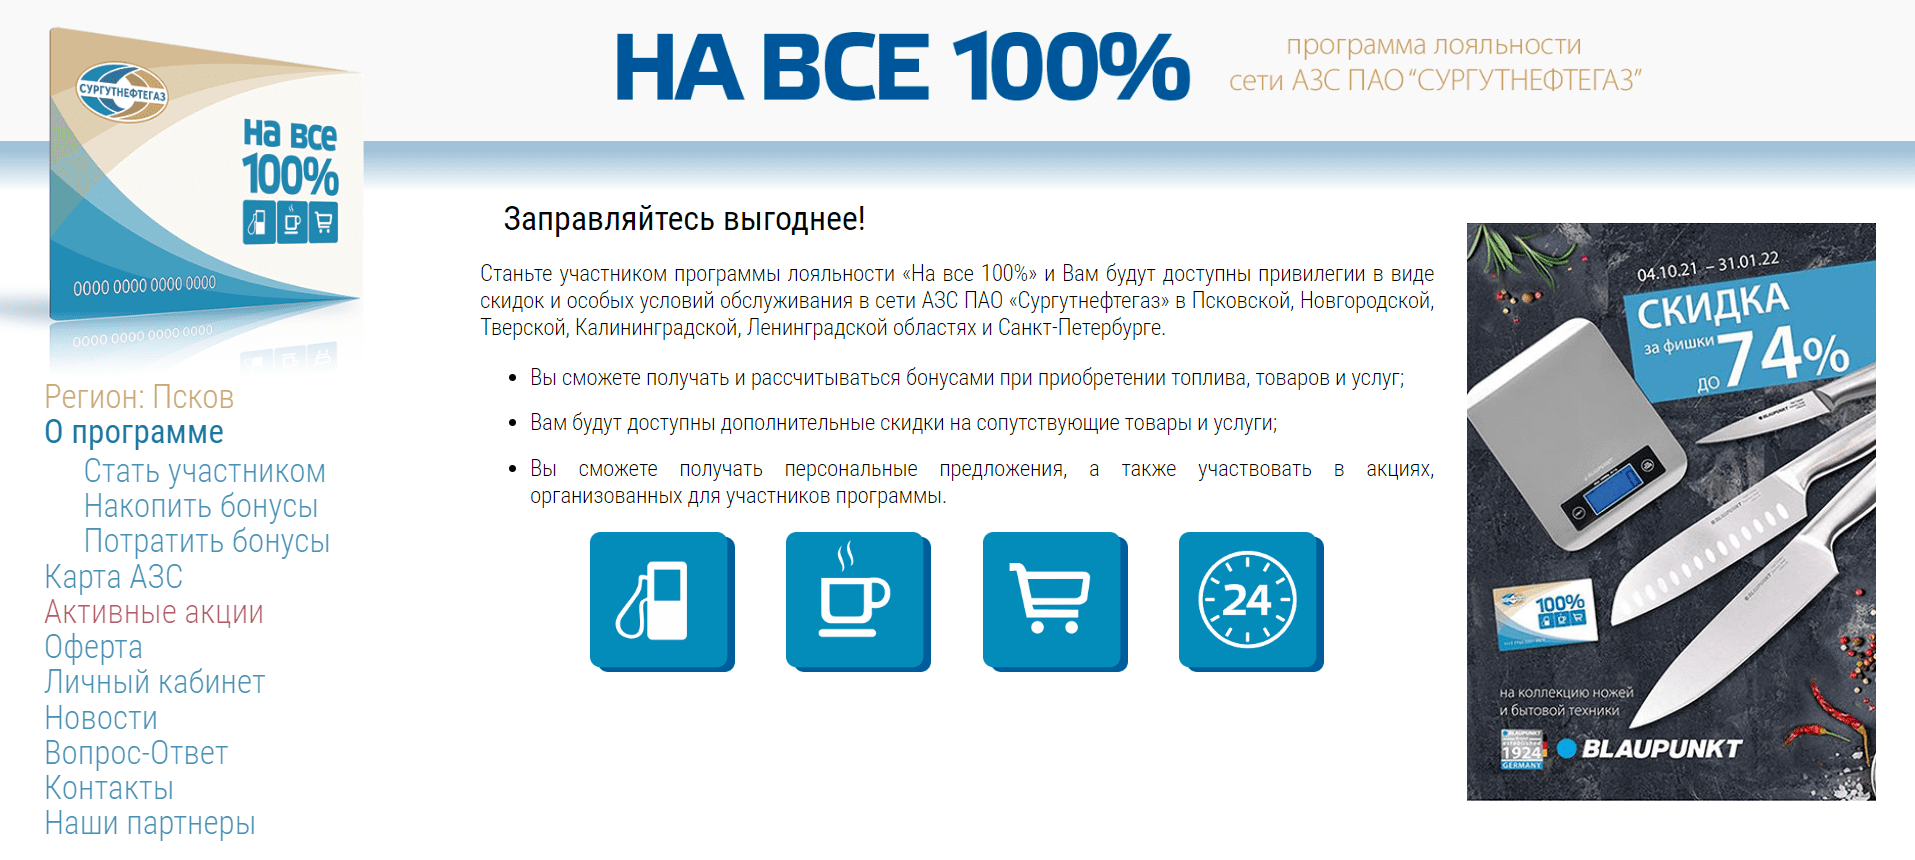 Sngbonus.ru (Сургутнефтегаз)